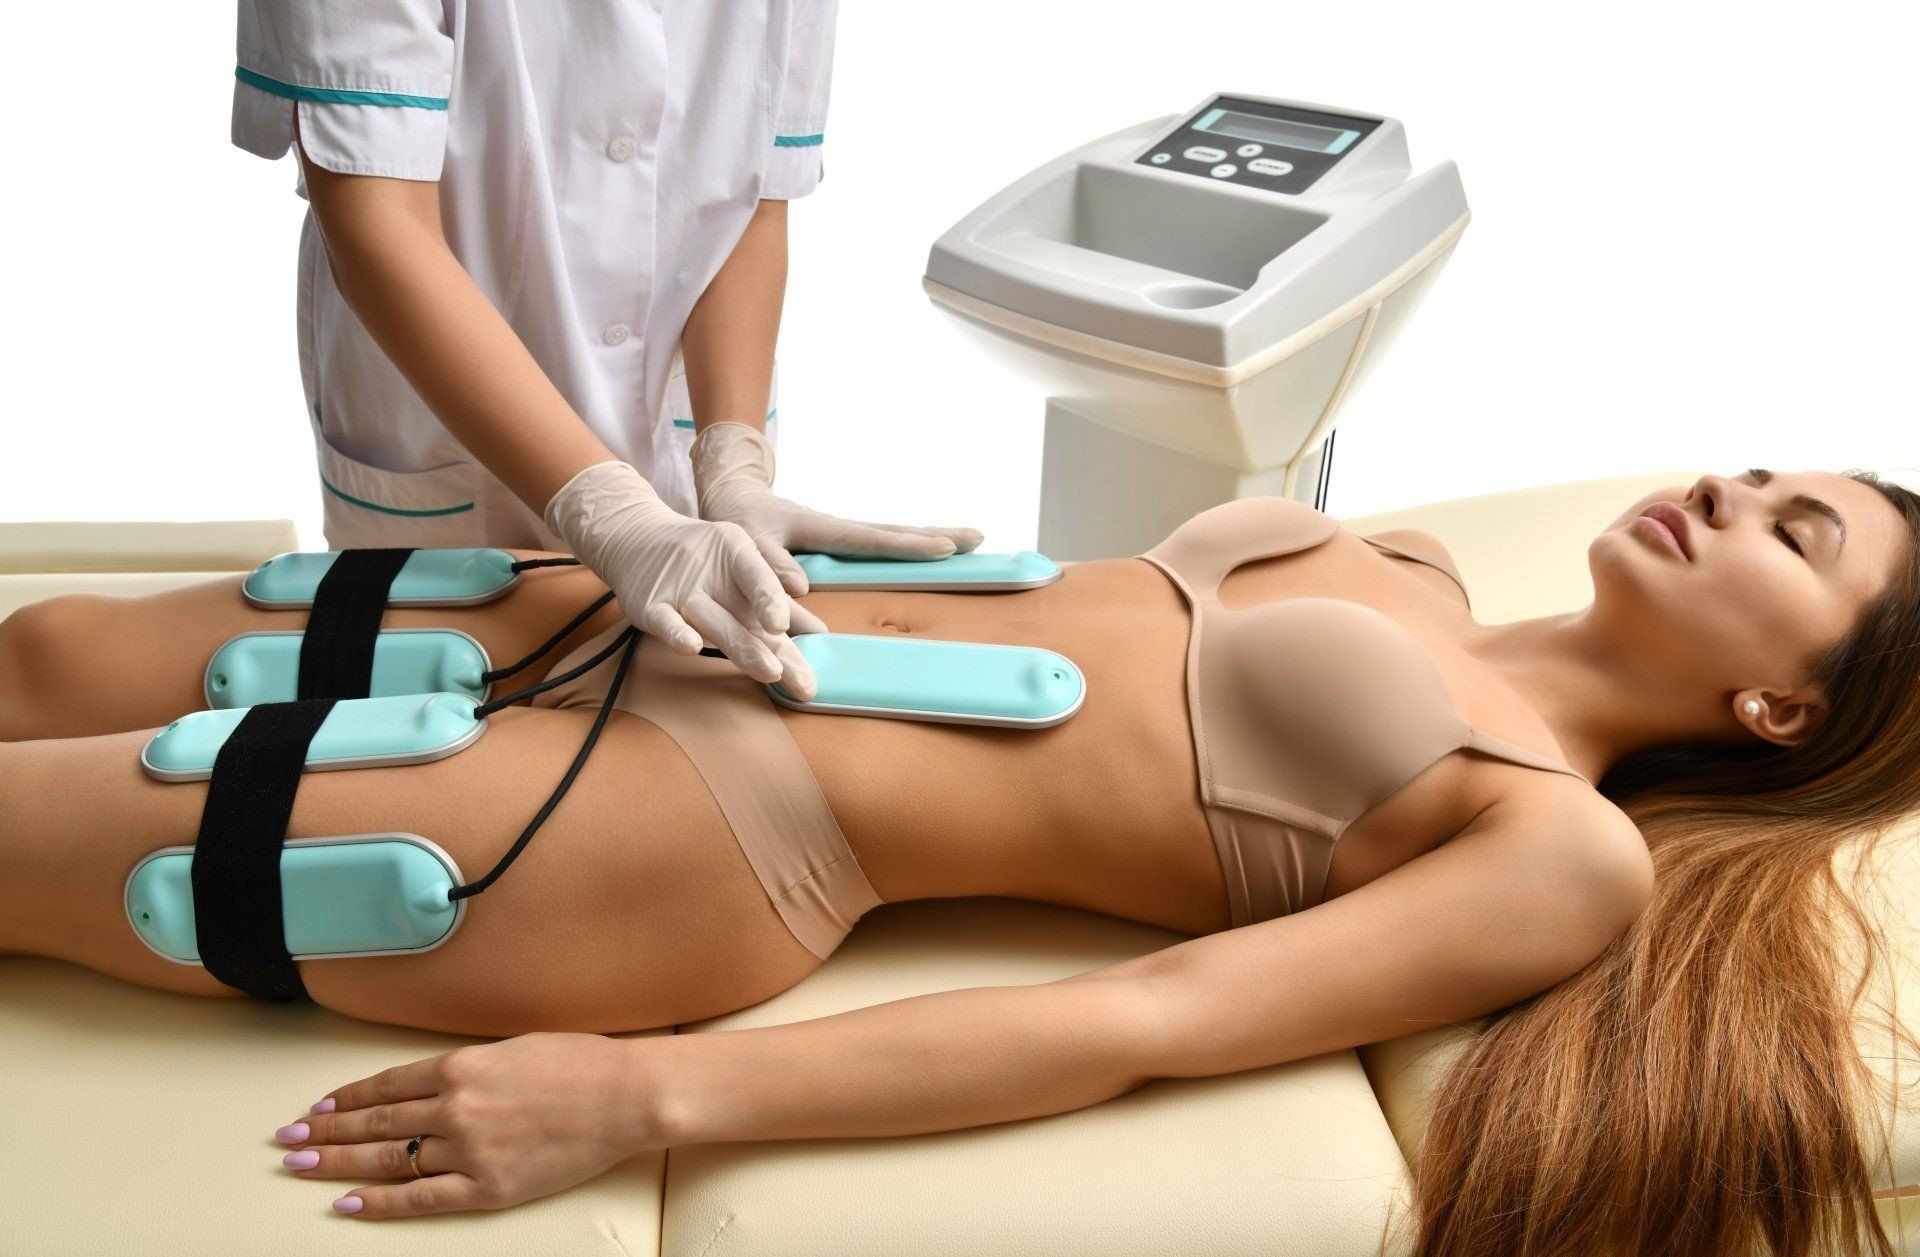 woman getting a laser lipo procedure